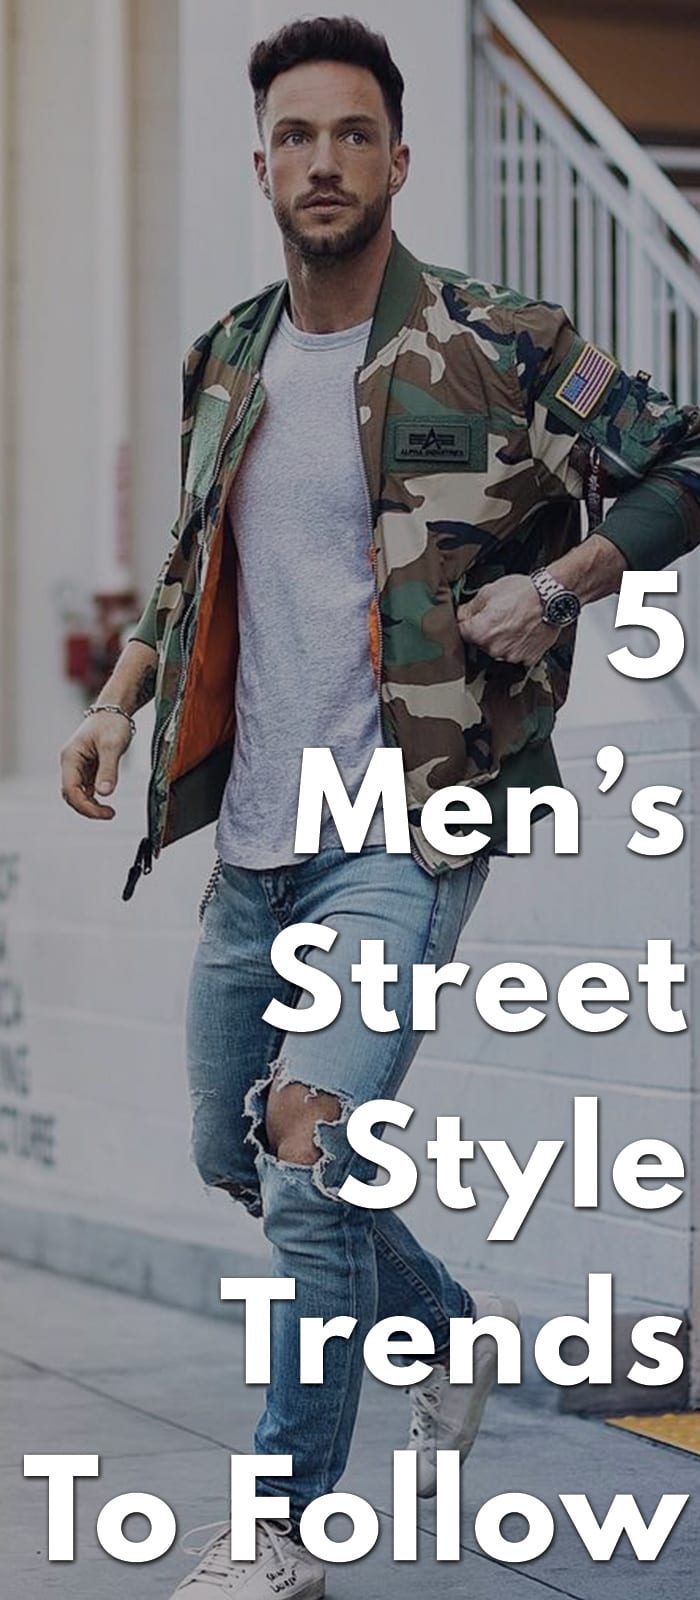 5 Men’s Street Style Trends To Follow